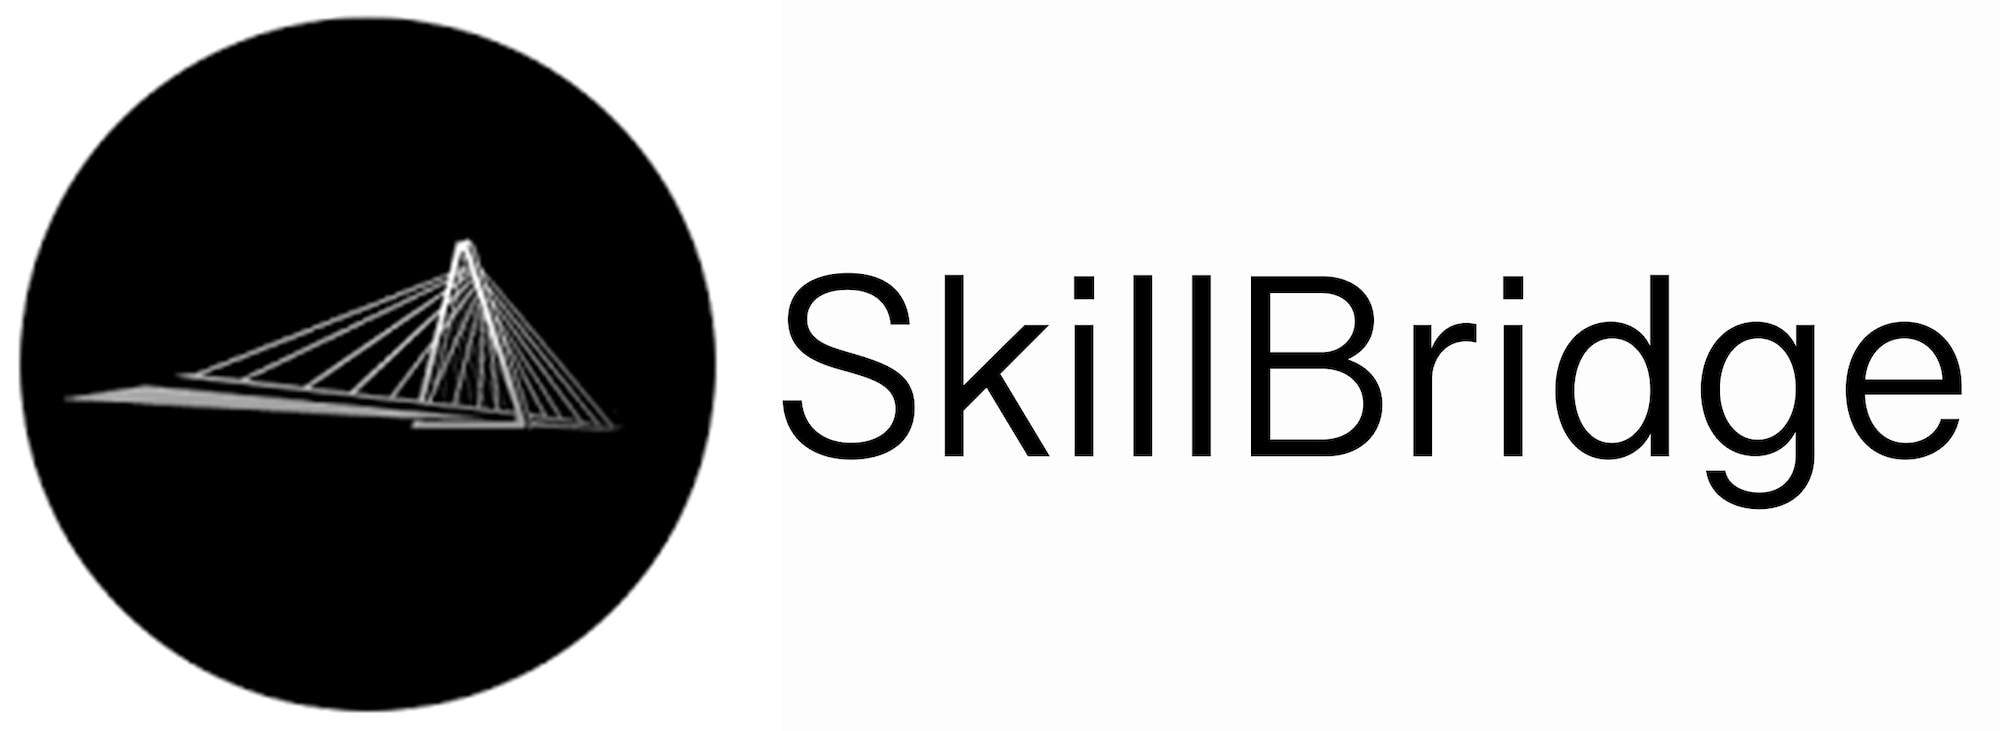 The Skill Bridge logo